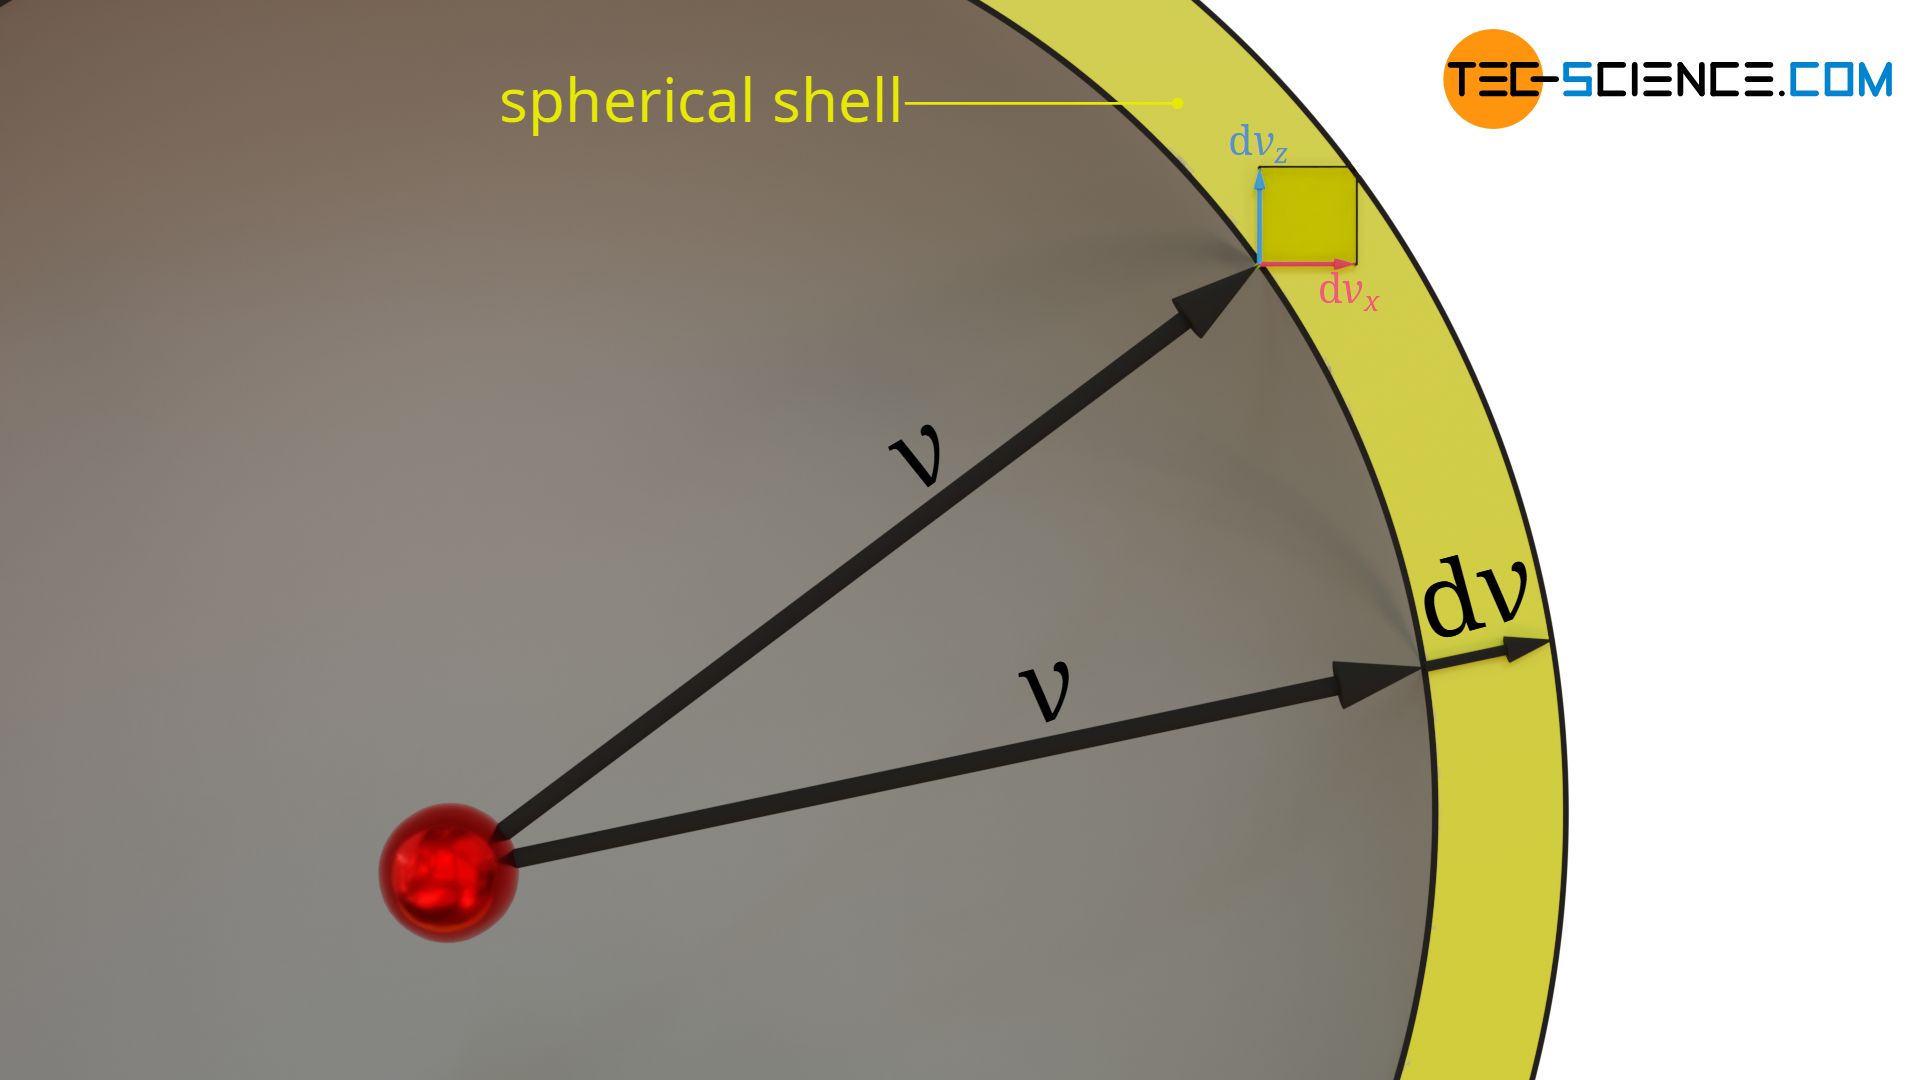 Volume of the spherical shell